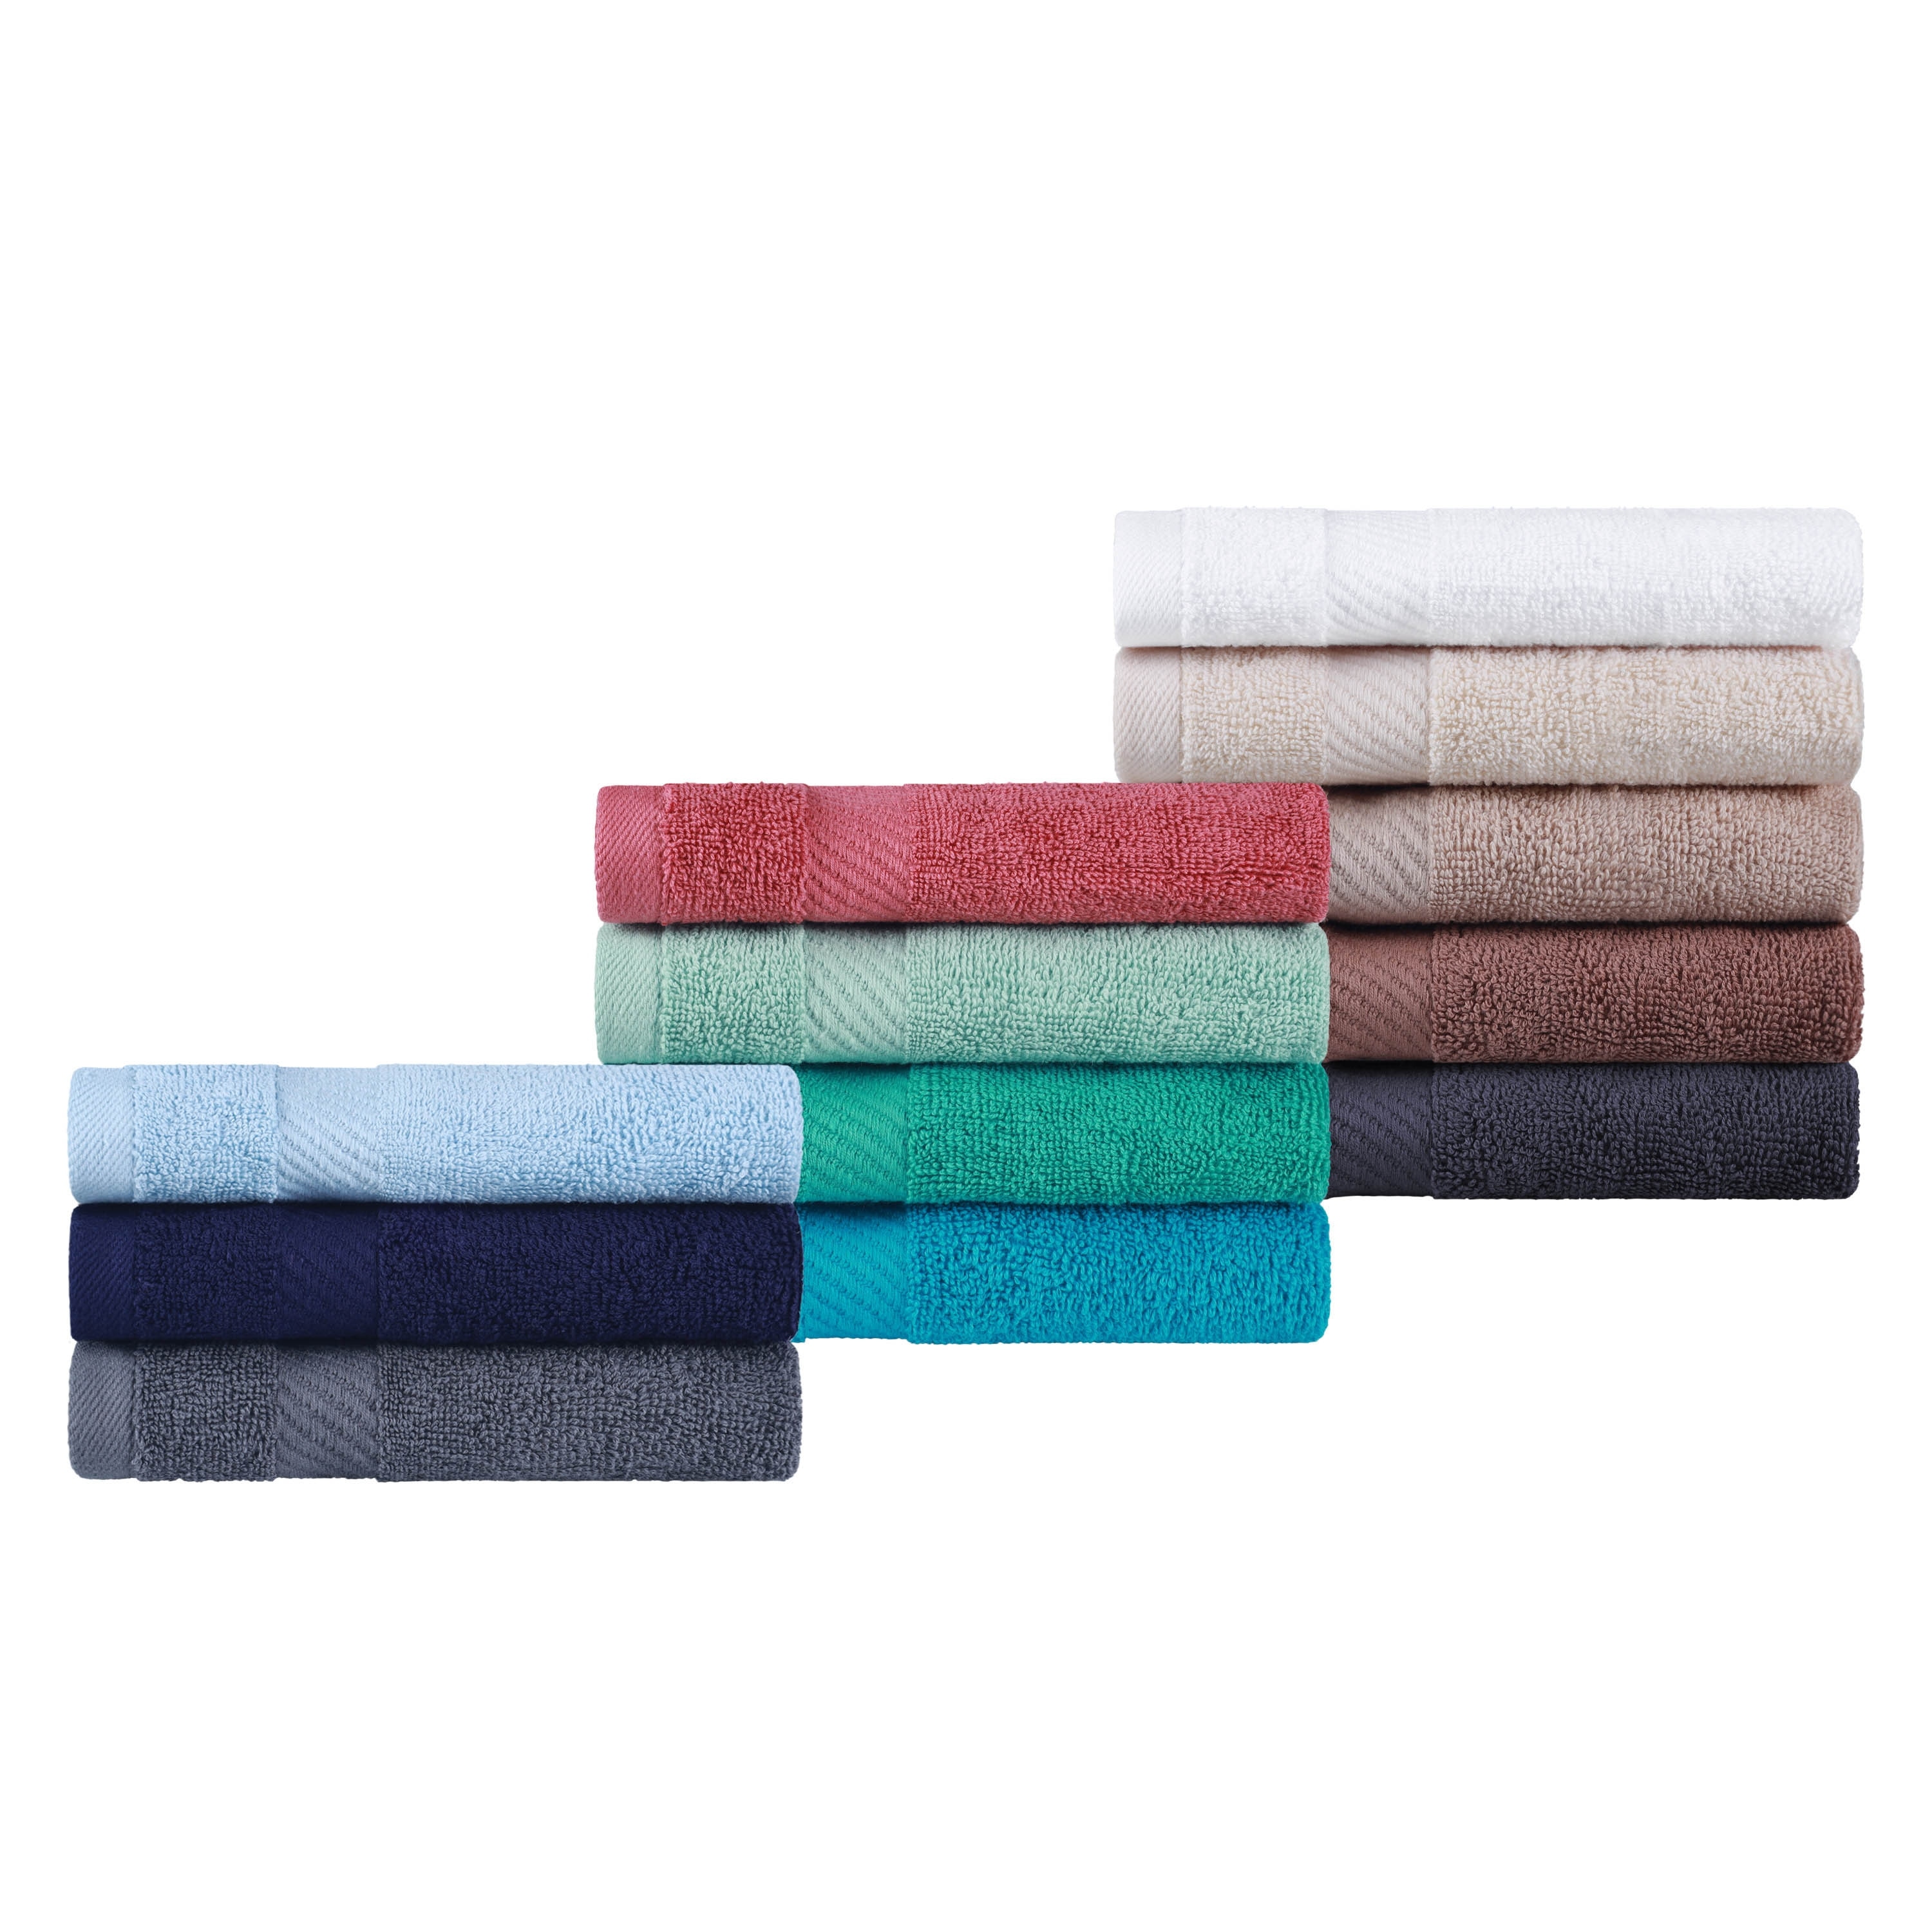 34 x 68 Oversized Zero-Twist Cotton Bath Sheets